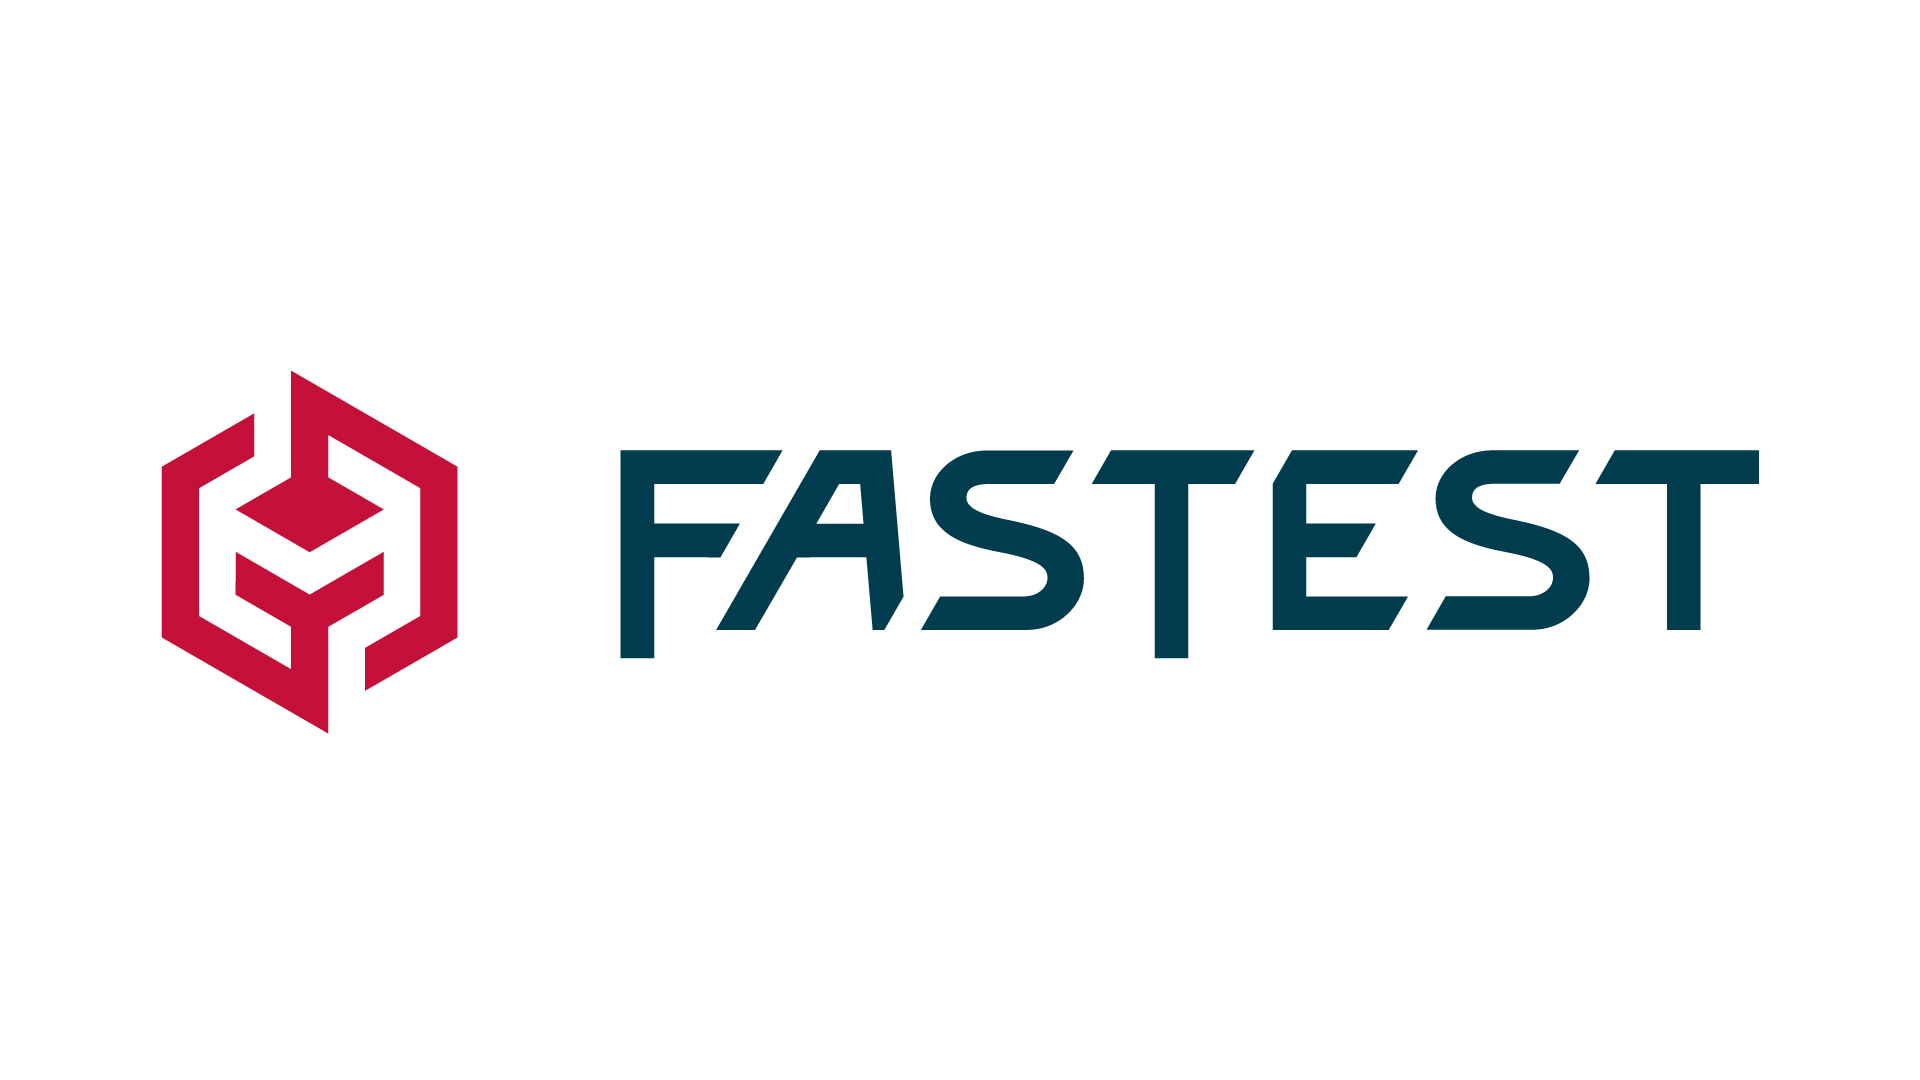 FasTest, Inc.